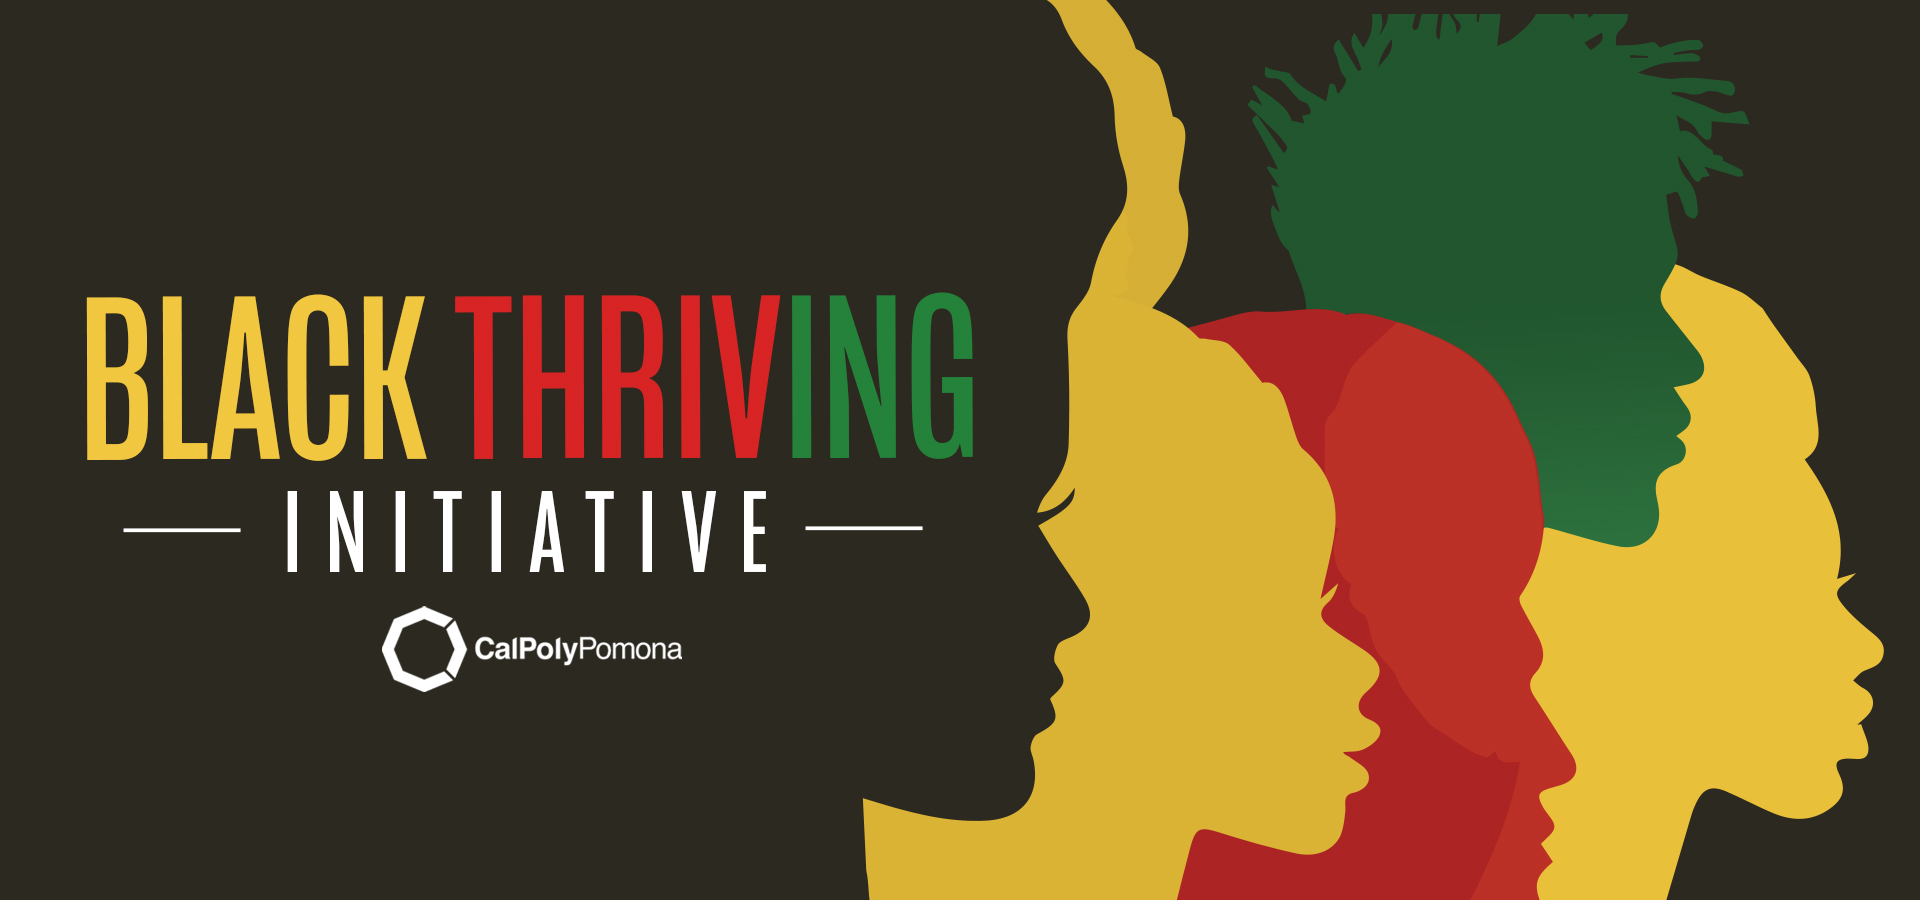 Black Thriving Initiative banner